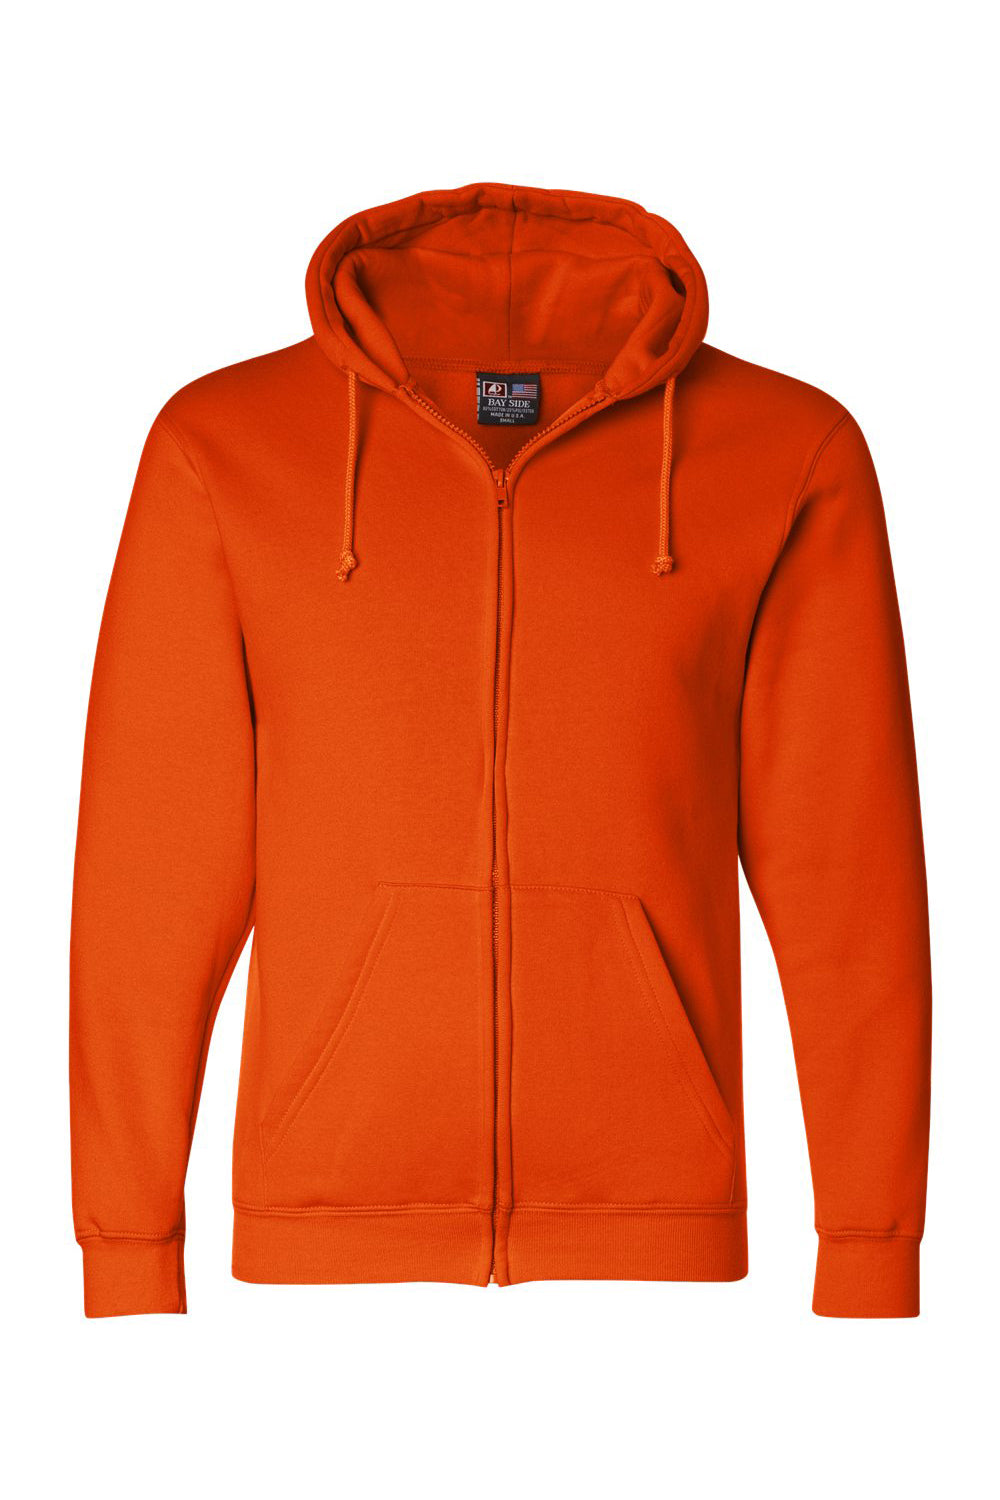 Bayside BA900 Mens USA Made Full Zip Hooded Sweatshirt Hoodie Bright Orange Flat Front